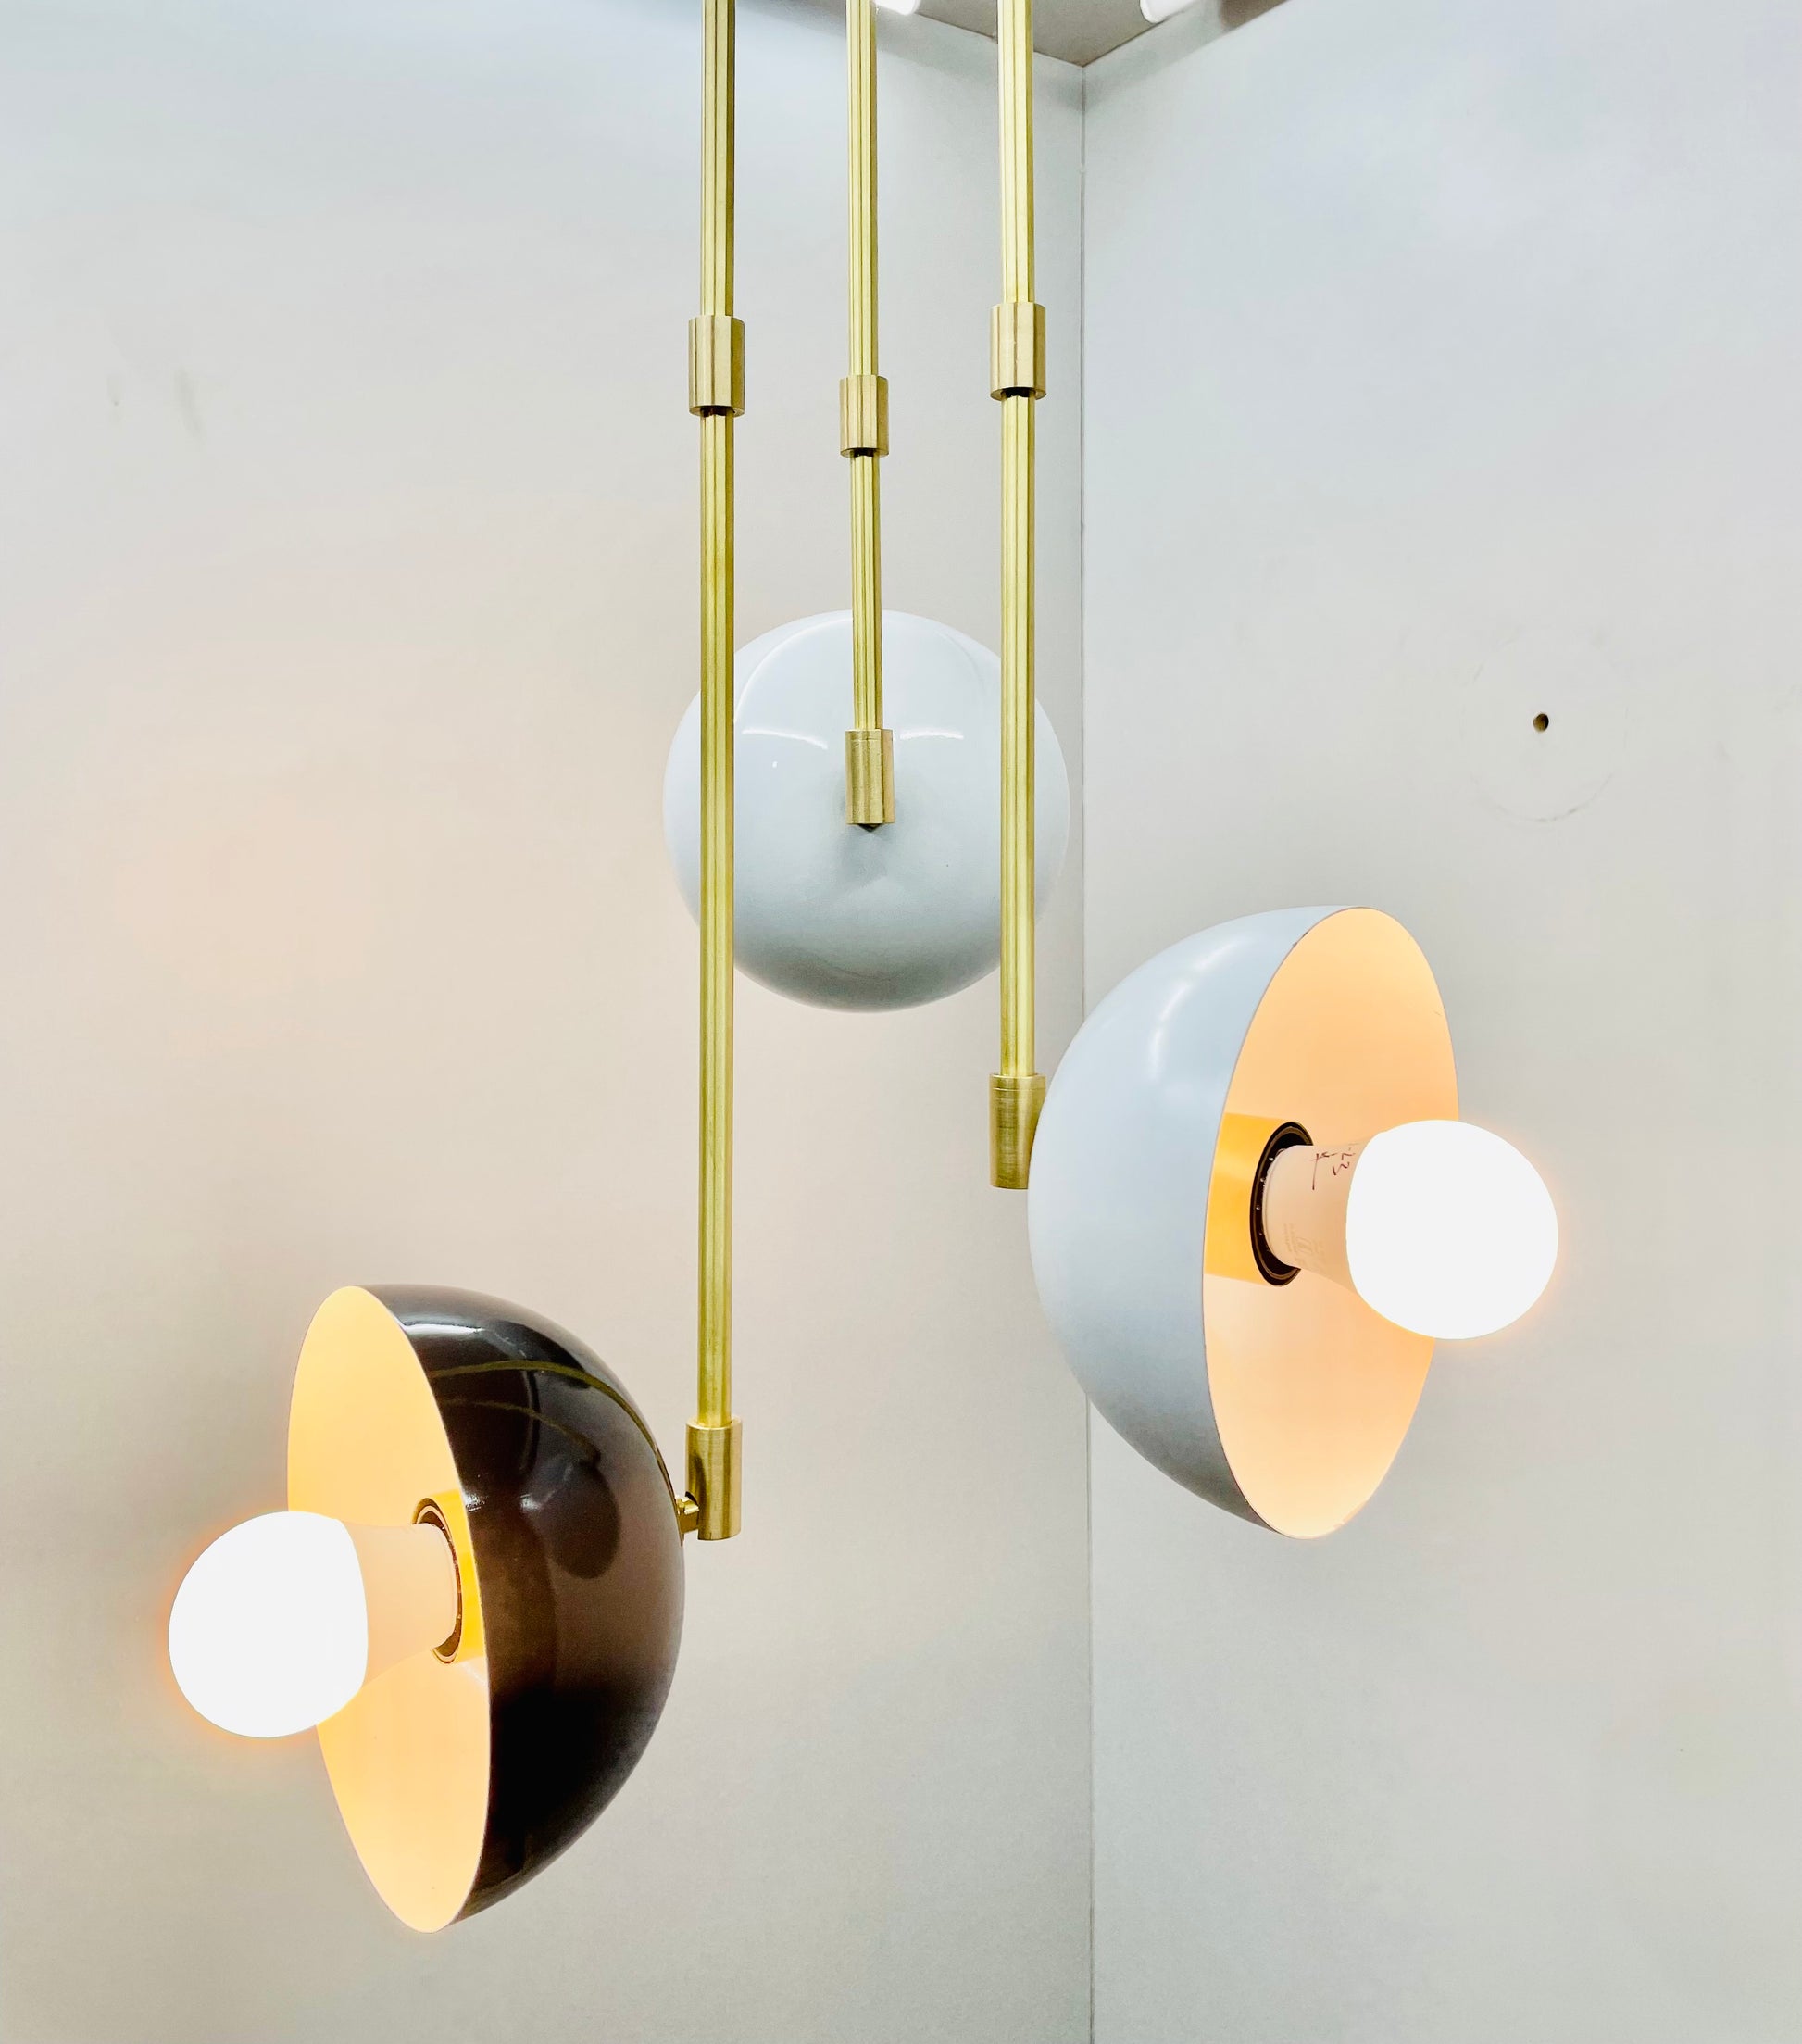 3 Cone Mid Century Modern Sputnik Chandelier Light Fixture - Global Lights Hub